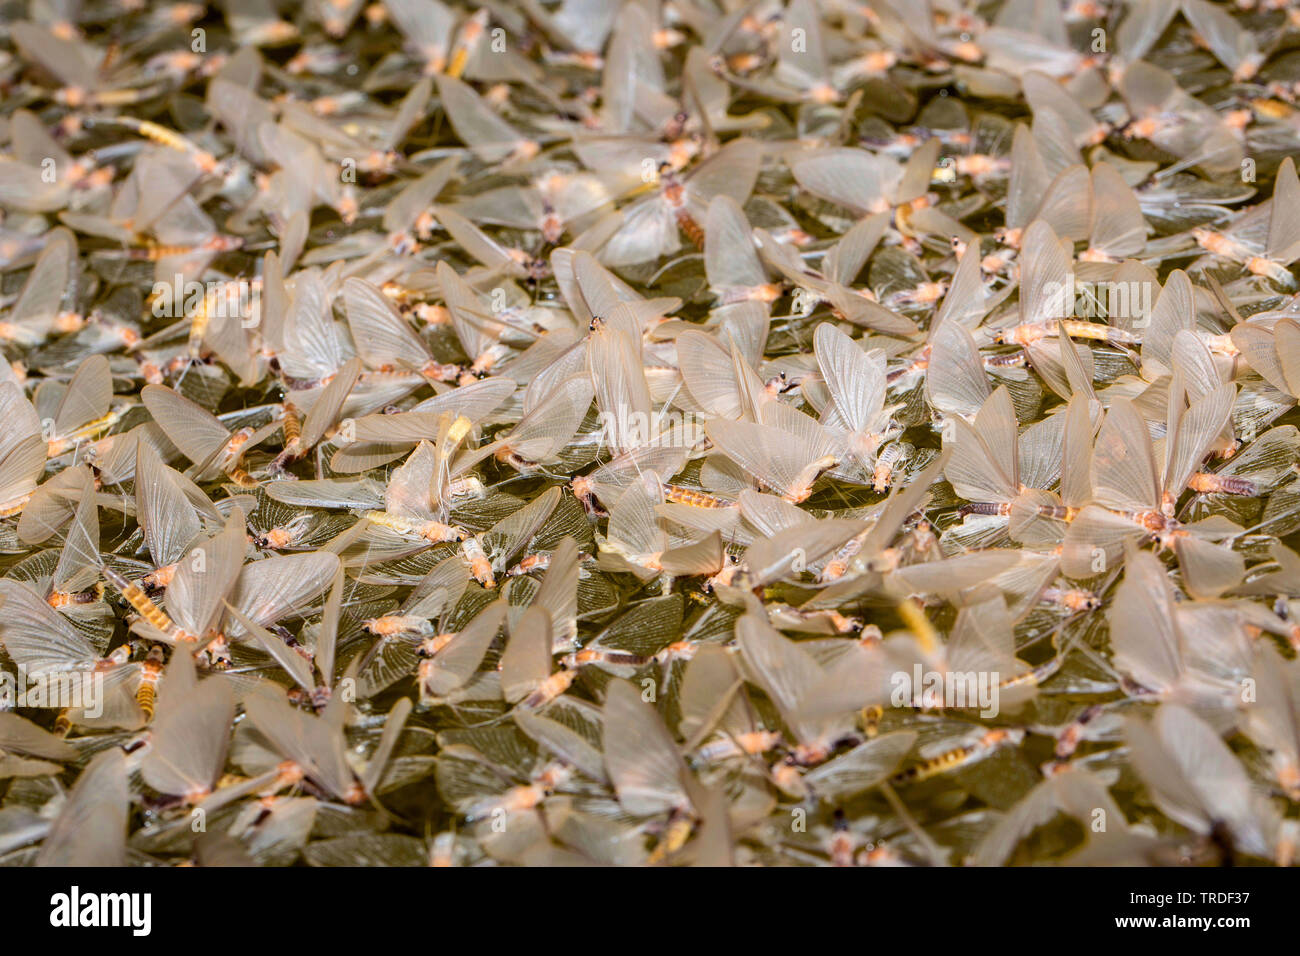 Virgin mayfly (Ephoron virgo, Polymitarcis virgo), a lot of females with translucent eggs drifting on the water surface, Germany, Bavaria Stock Photo